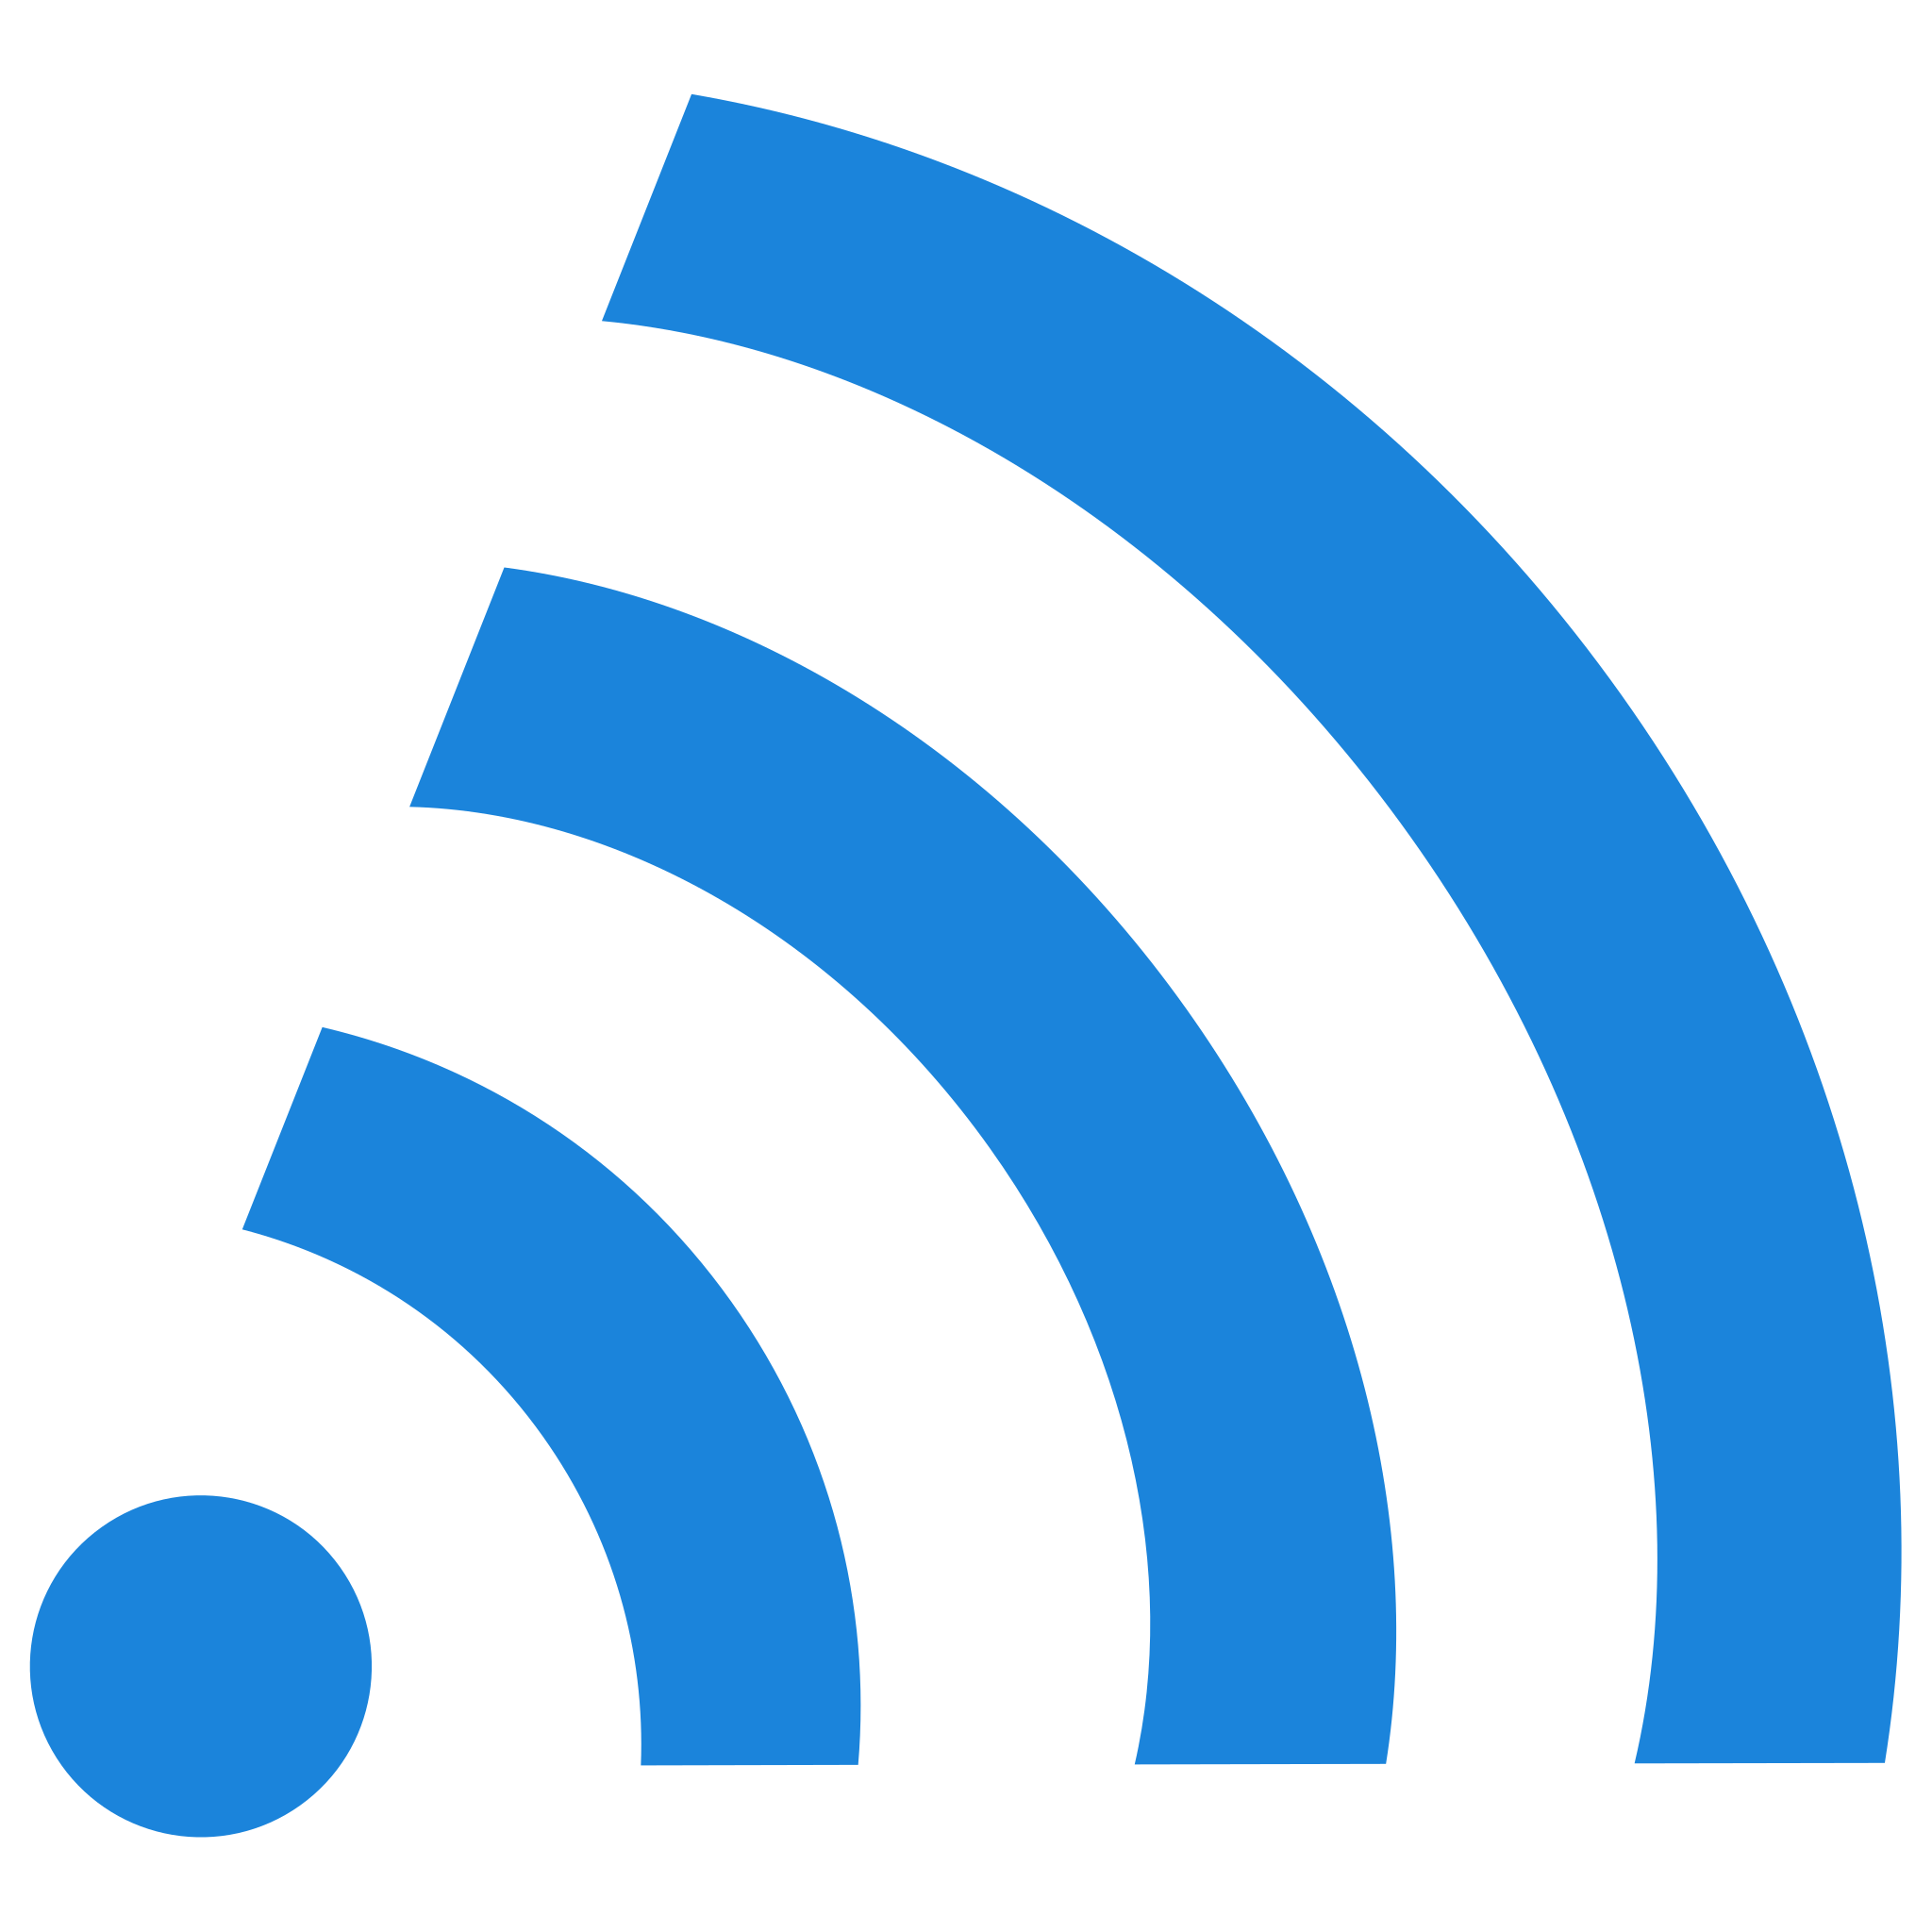 Clock and Wi-Fi symbol